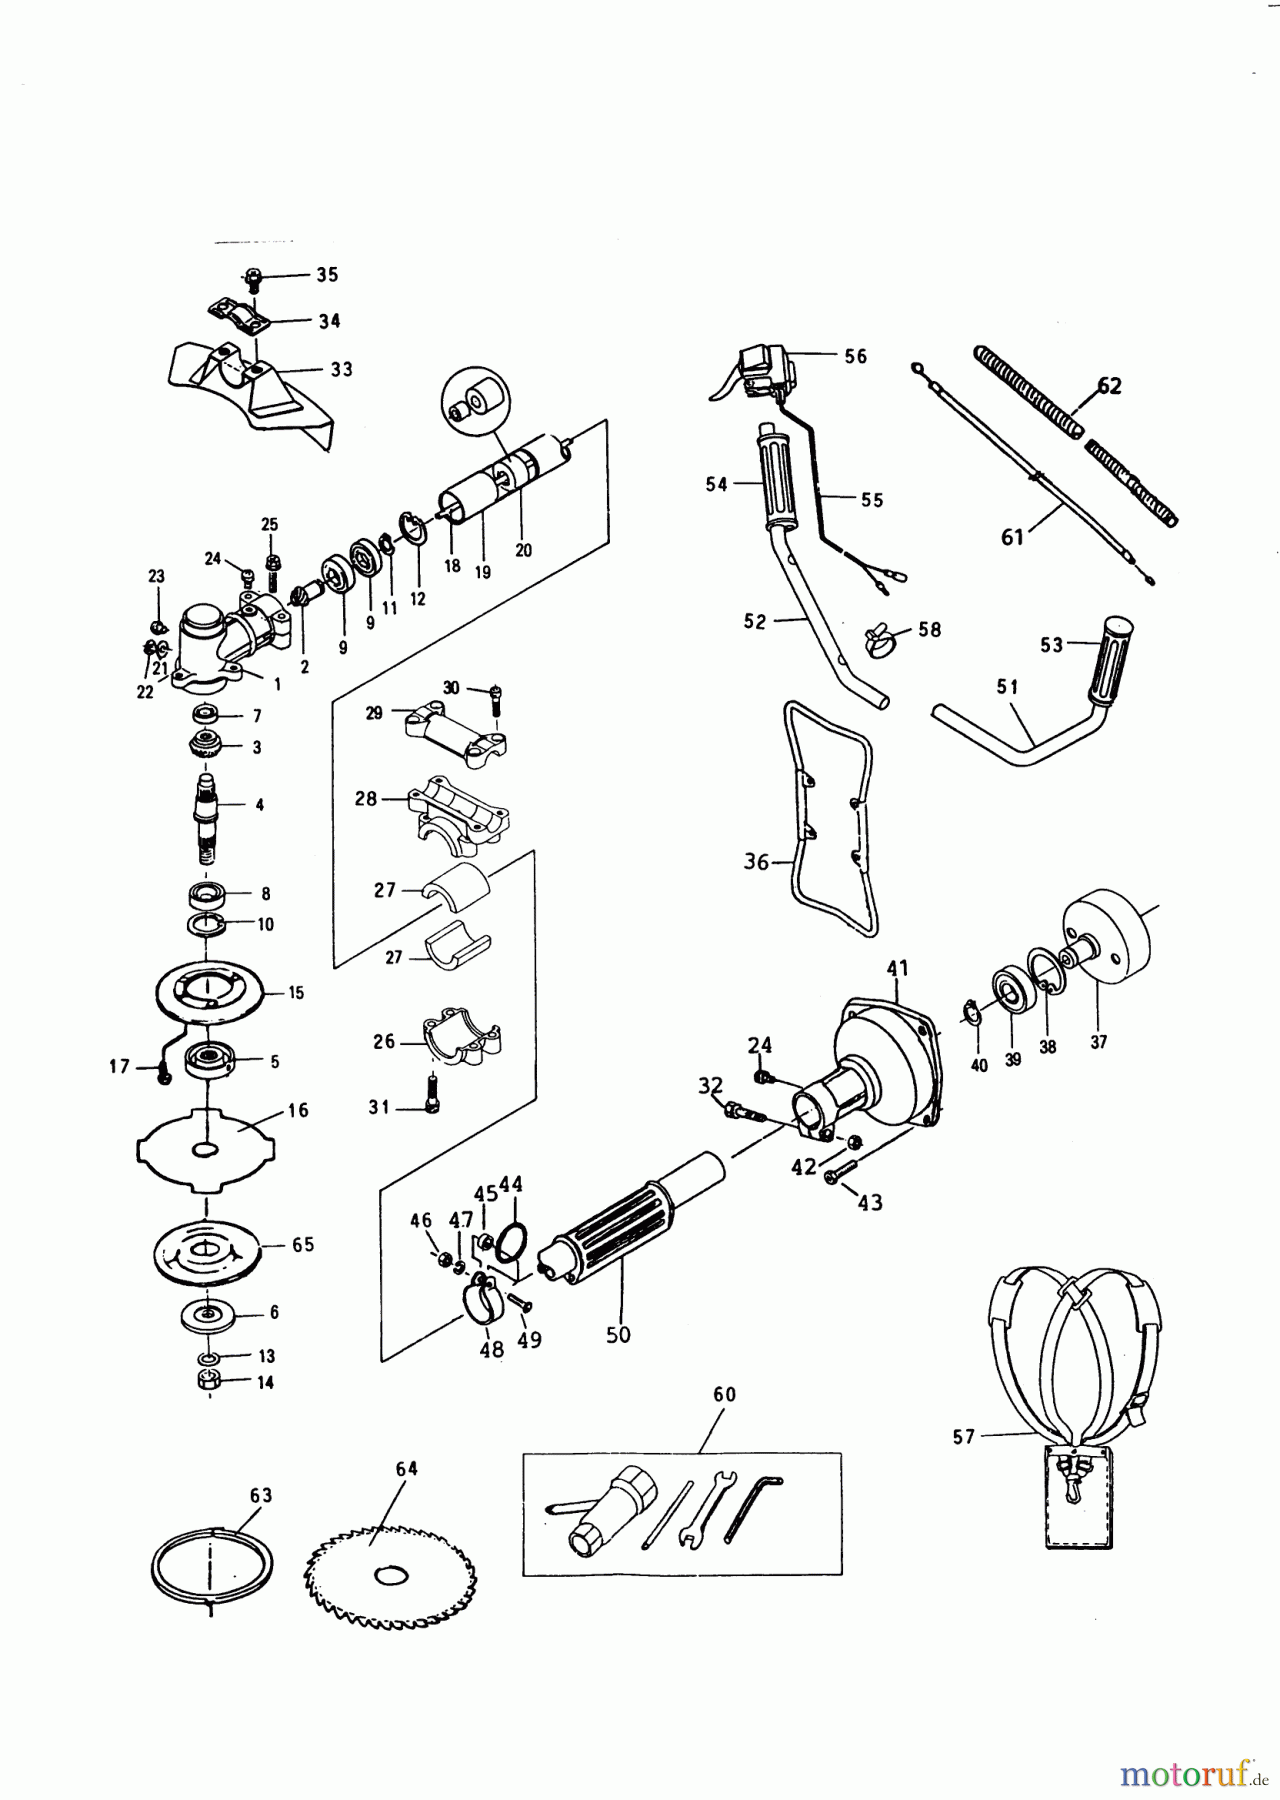  AL-KO Gartentechnik Motorsensen MS 400 Seite 1